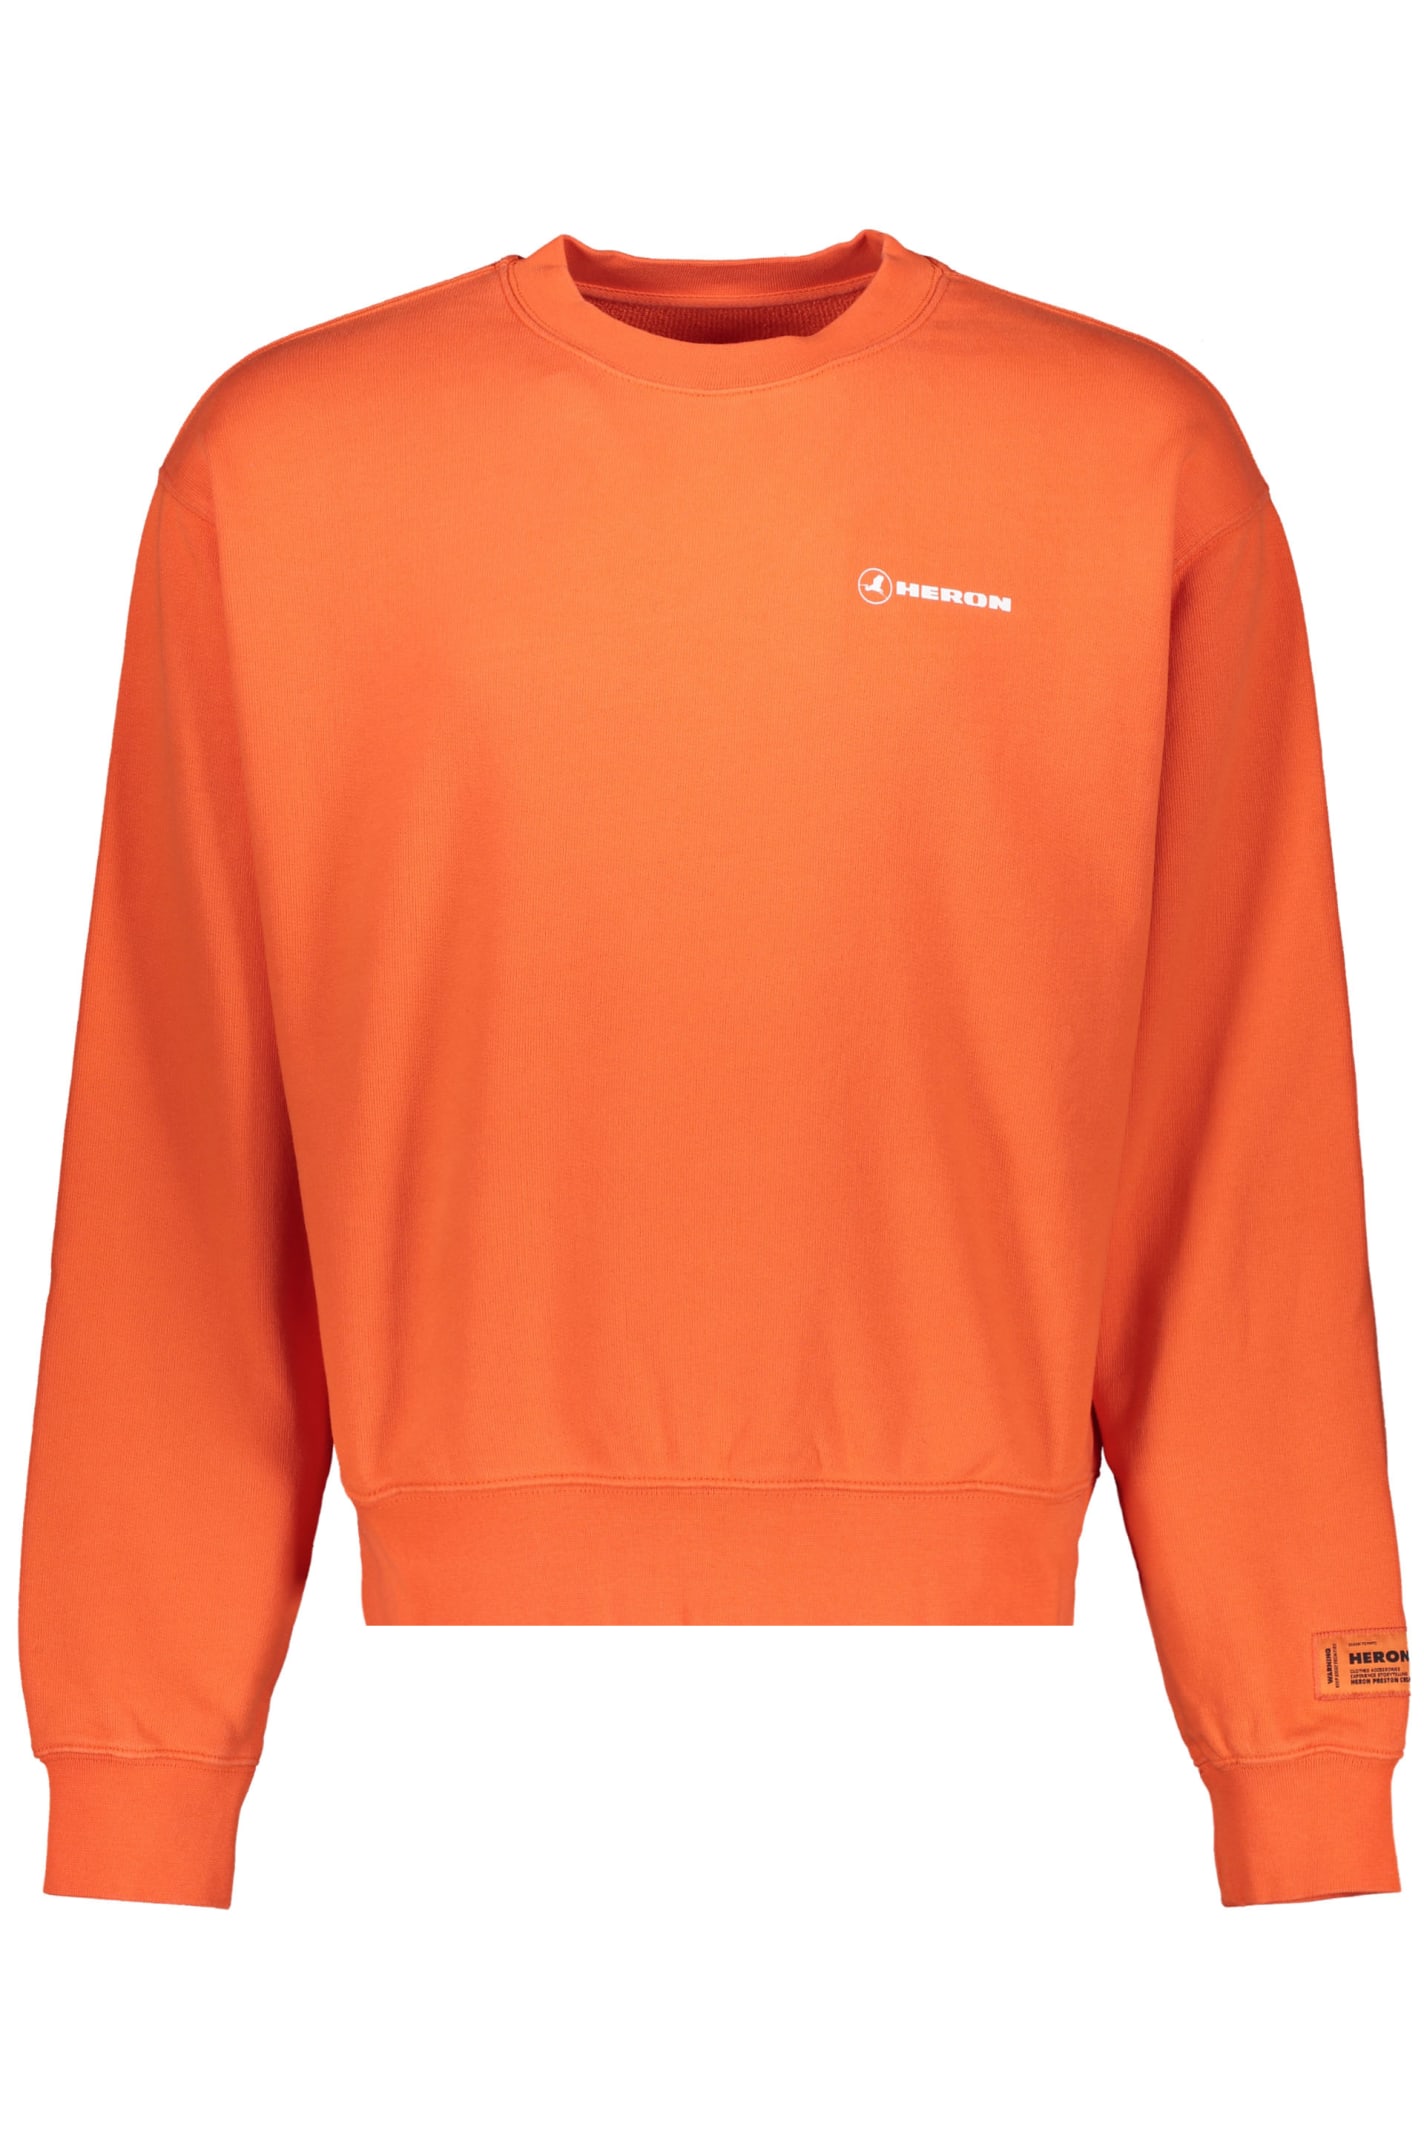 Heron Preston Print Sweatshirt In Orange